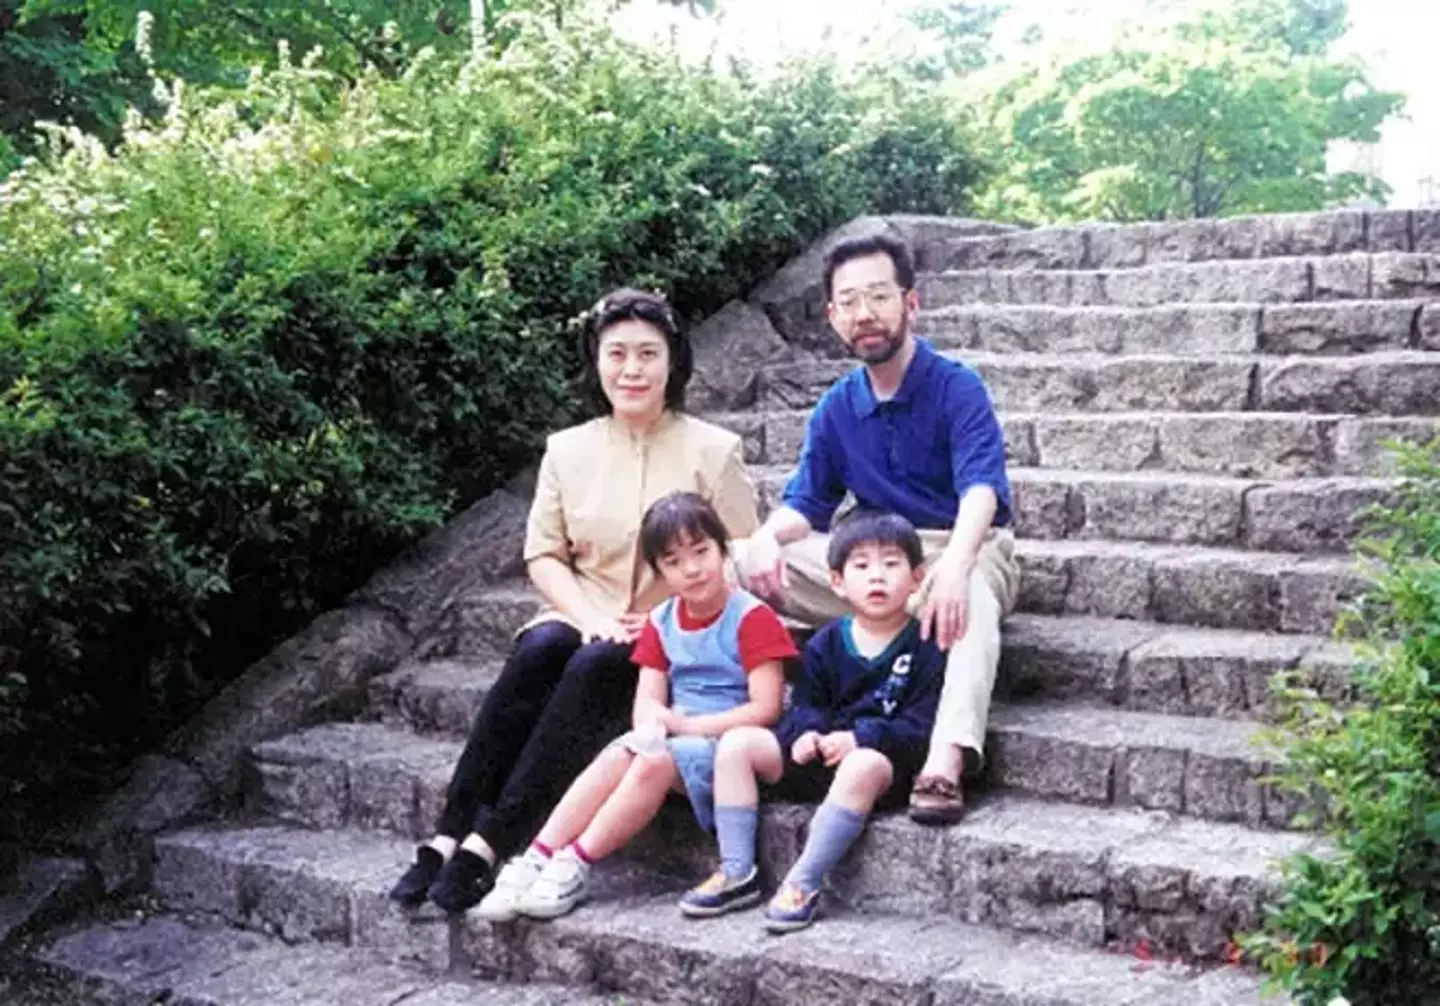 Mikio Miyazawa and his wife Yasuko Miyazawa 41, with their children Niina Miyazawa and Rei Miyazawa.